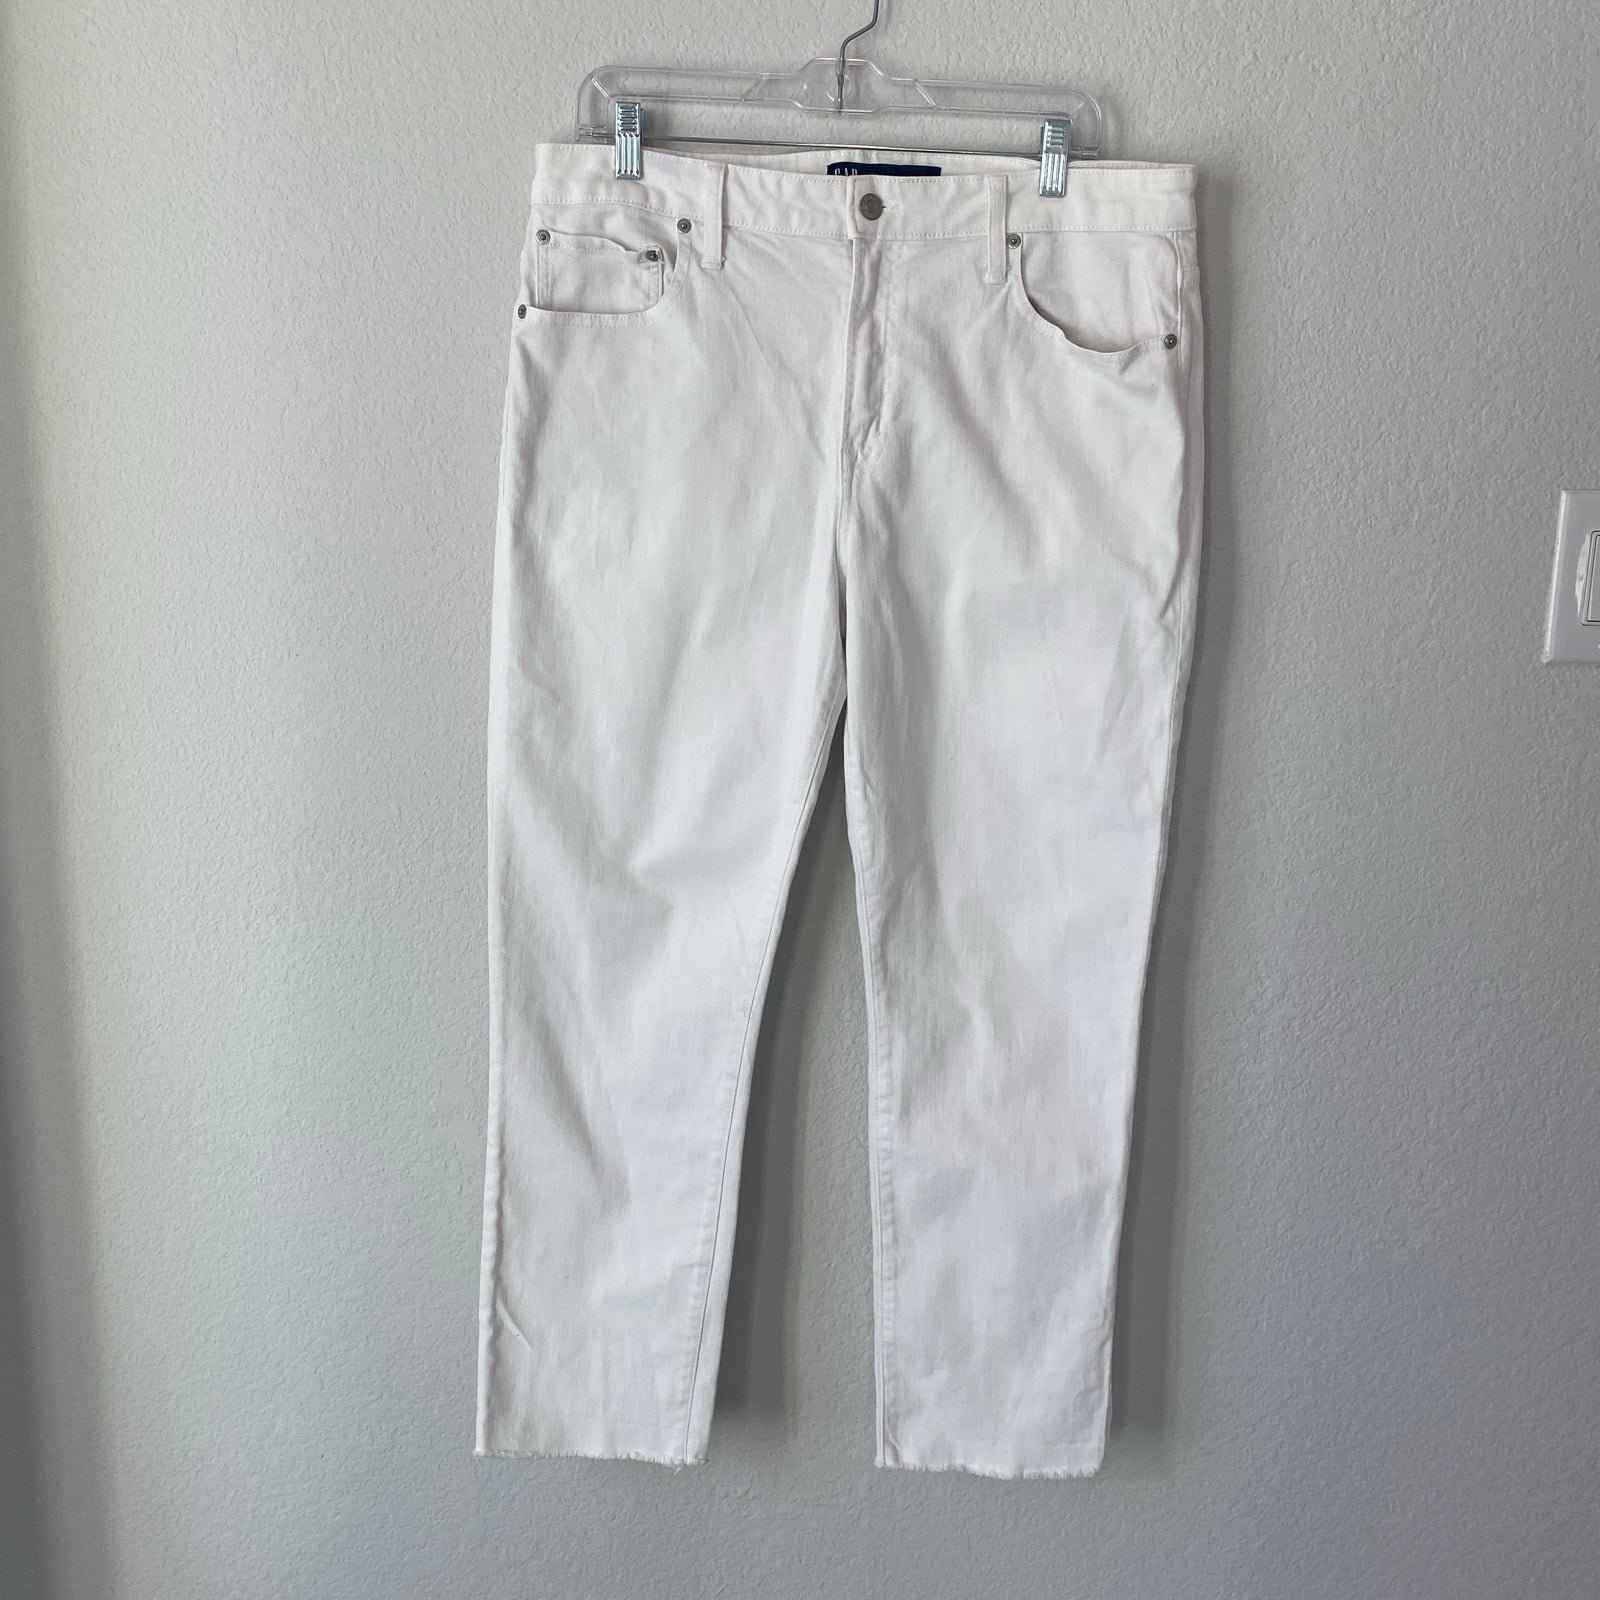 large discount Gap Denim Universal Slim Boyfriend Jeans size 12 jQ7qG7m0C High Quaity